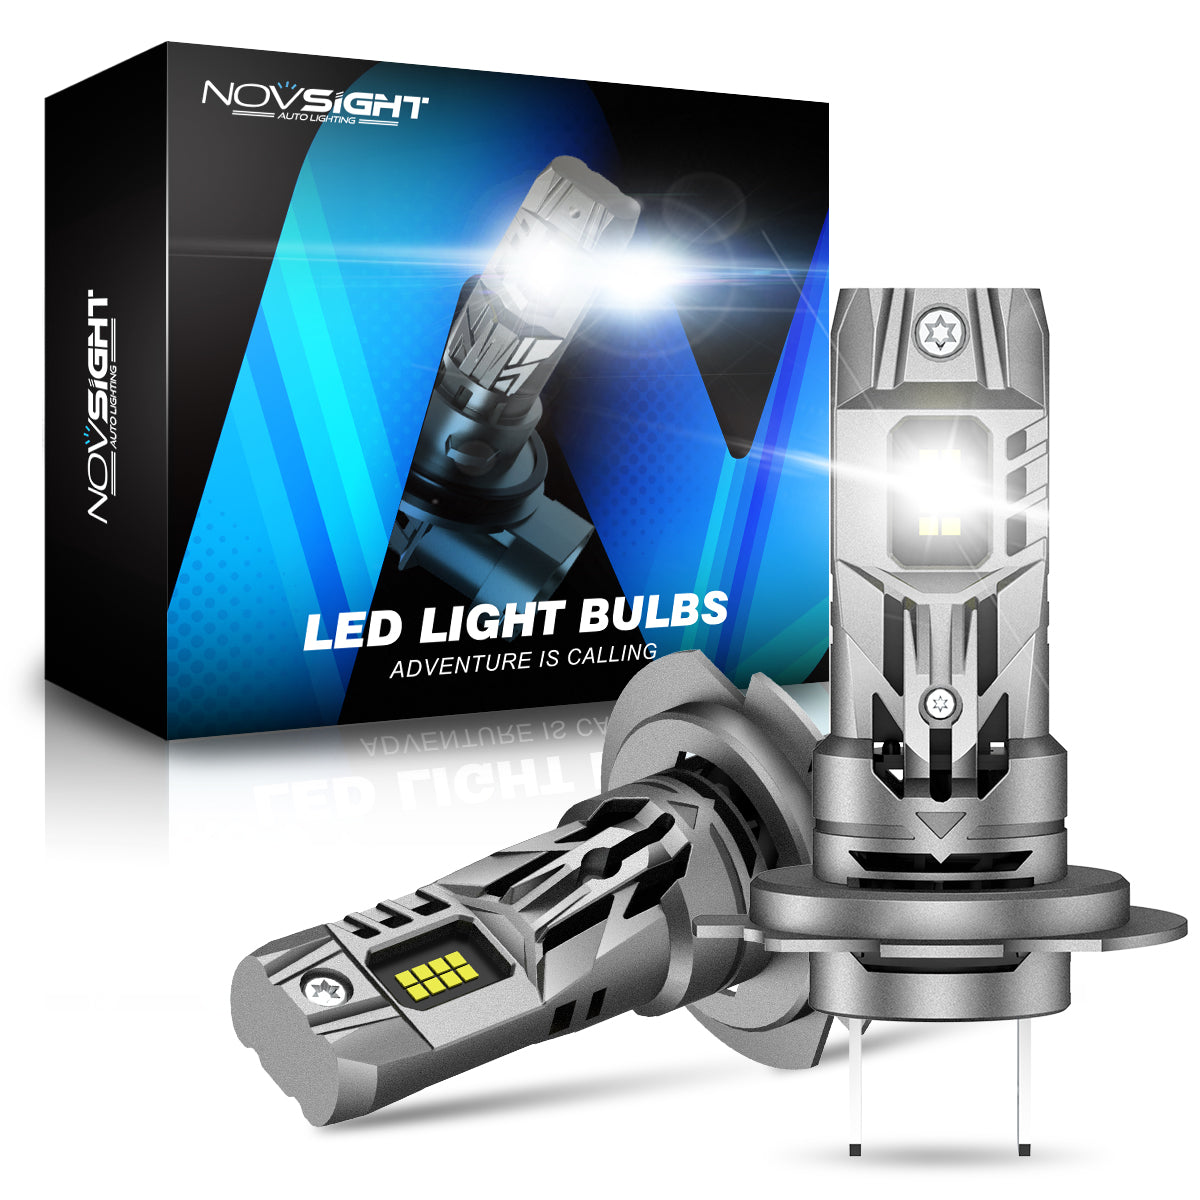 NIGHTEYE H7 LED Car Headlight Bulbs Lamp h7 60W 20000LM 6500K